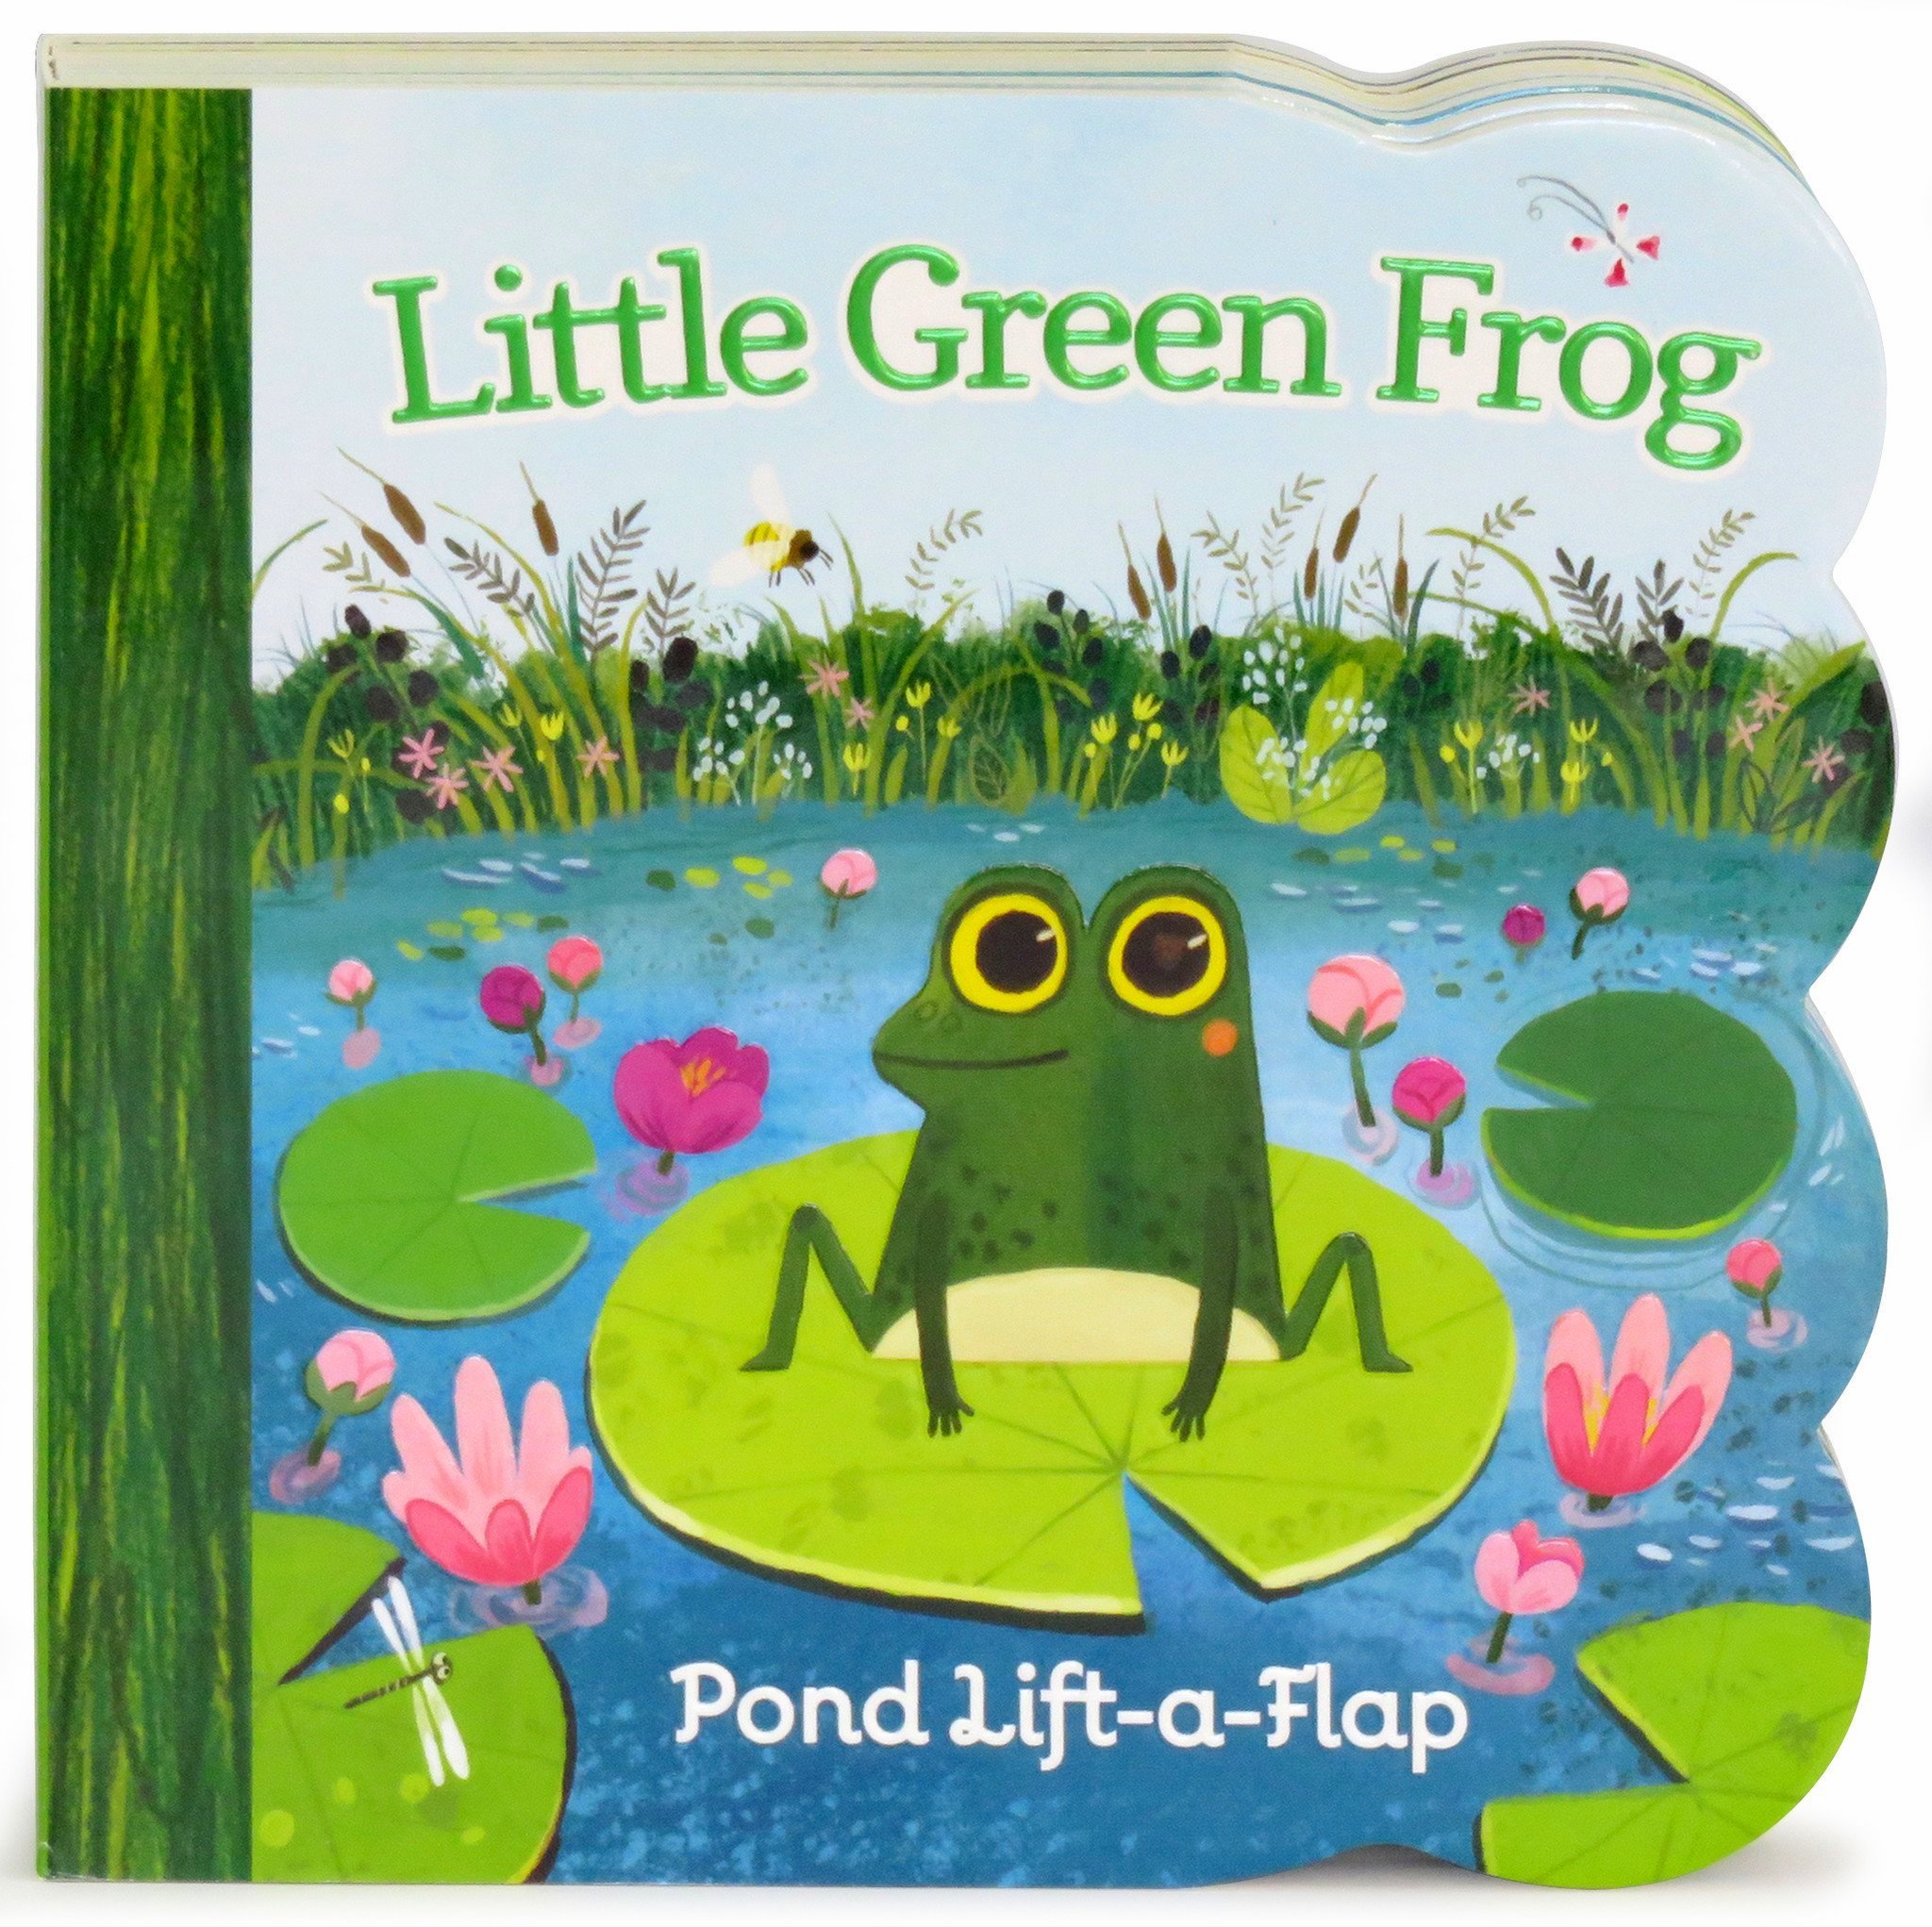 Little green frog photo